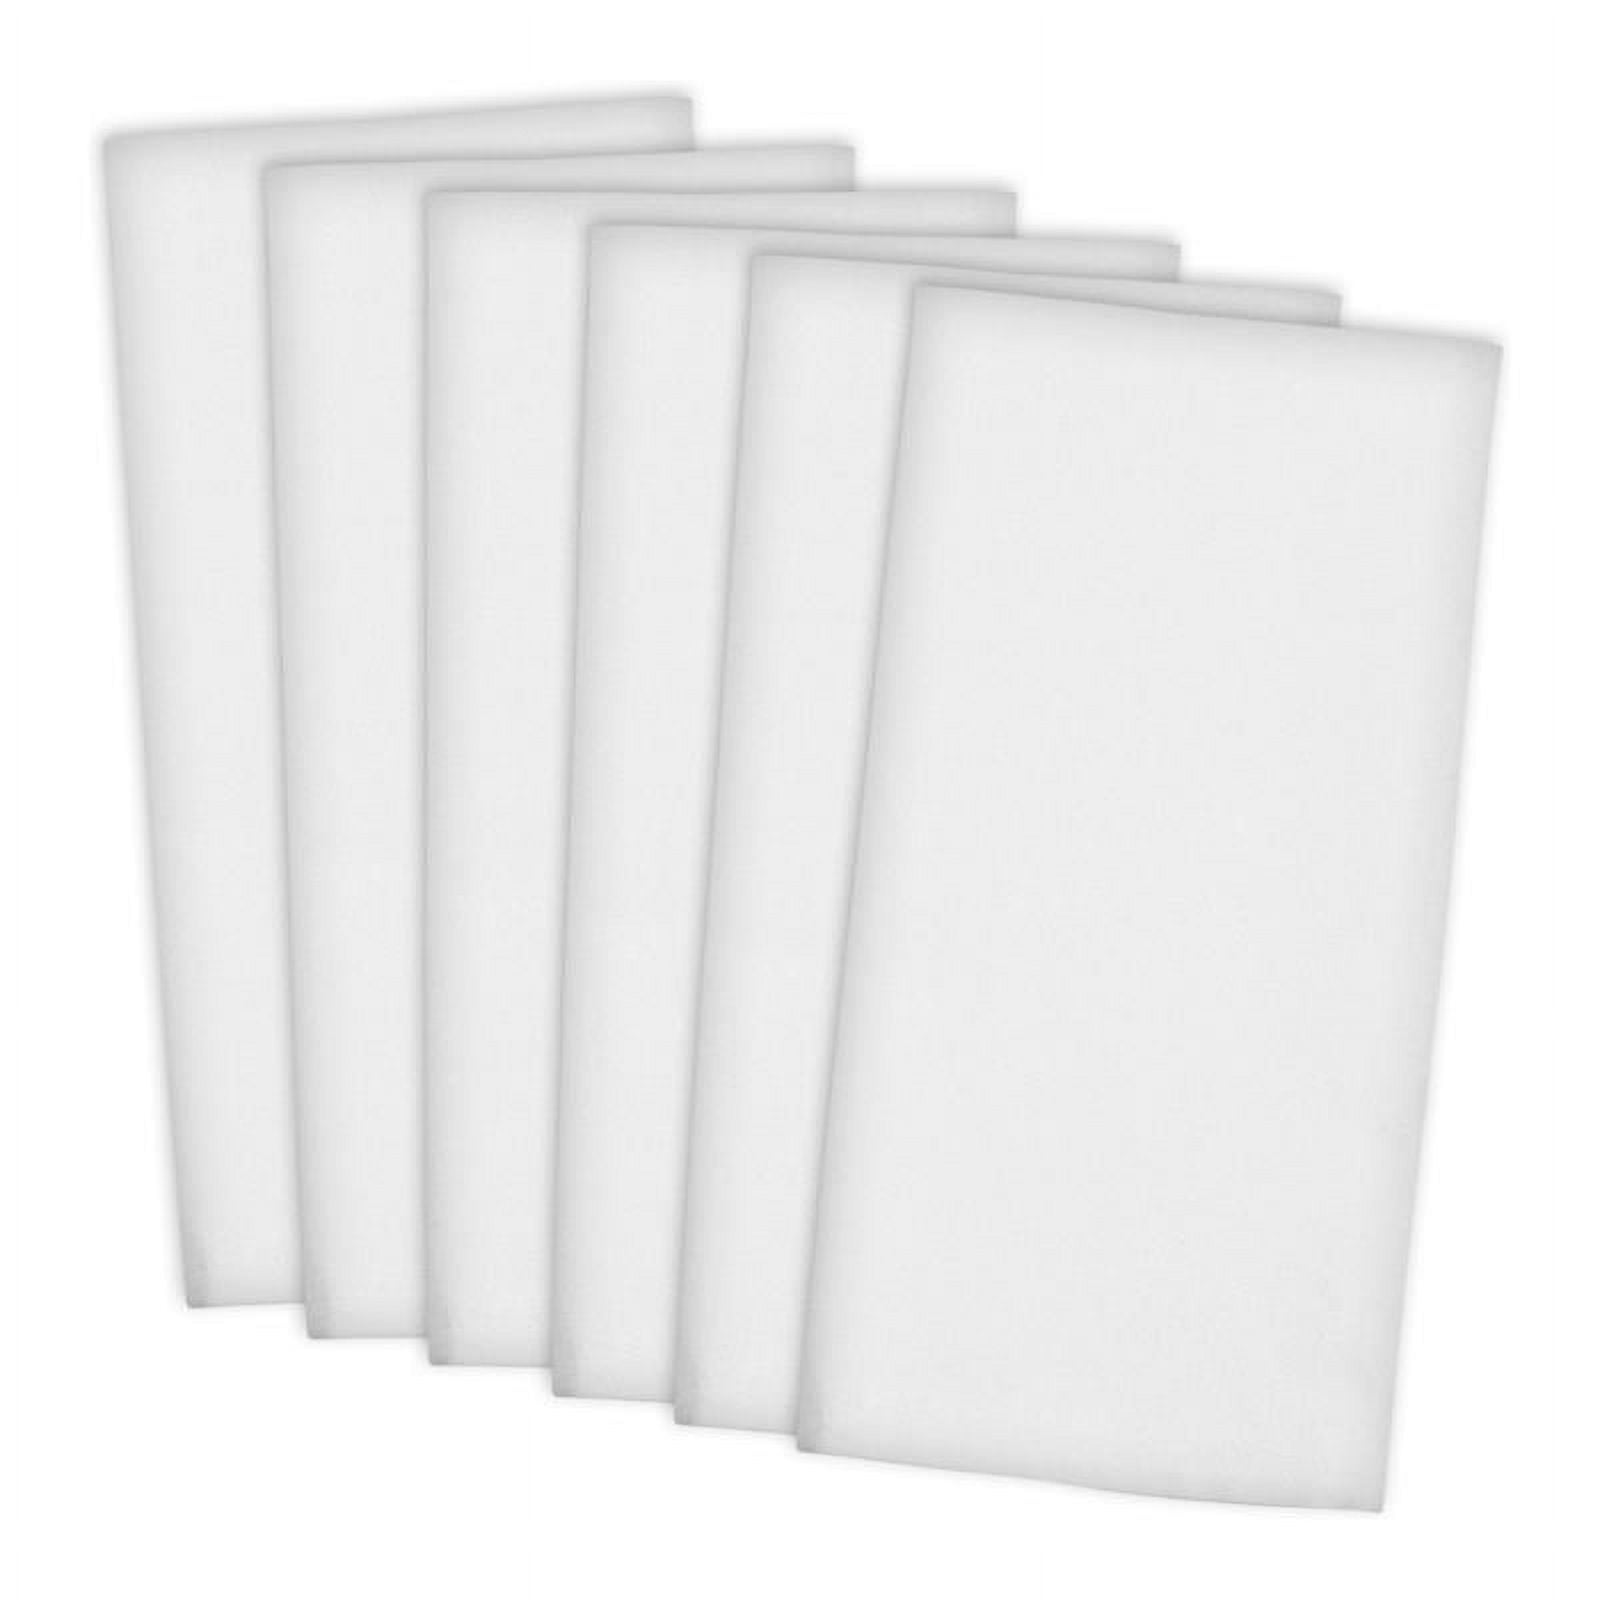 Design Imports Camz34463 White Flat Woven Dishtowels - Set Of 6